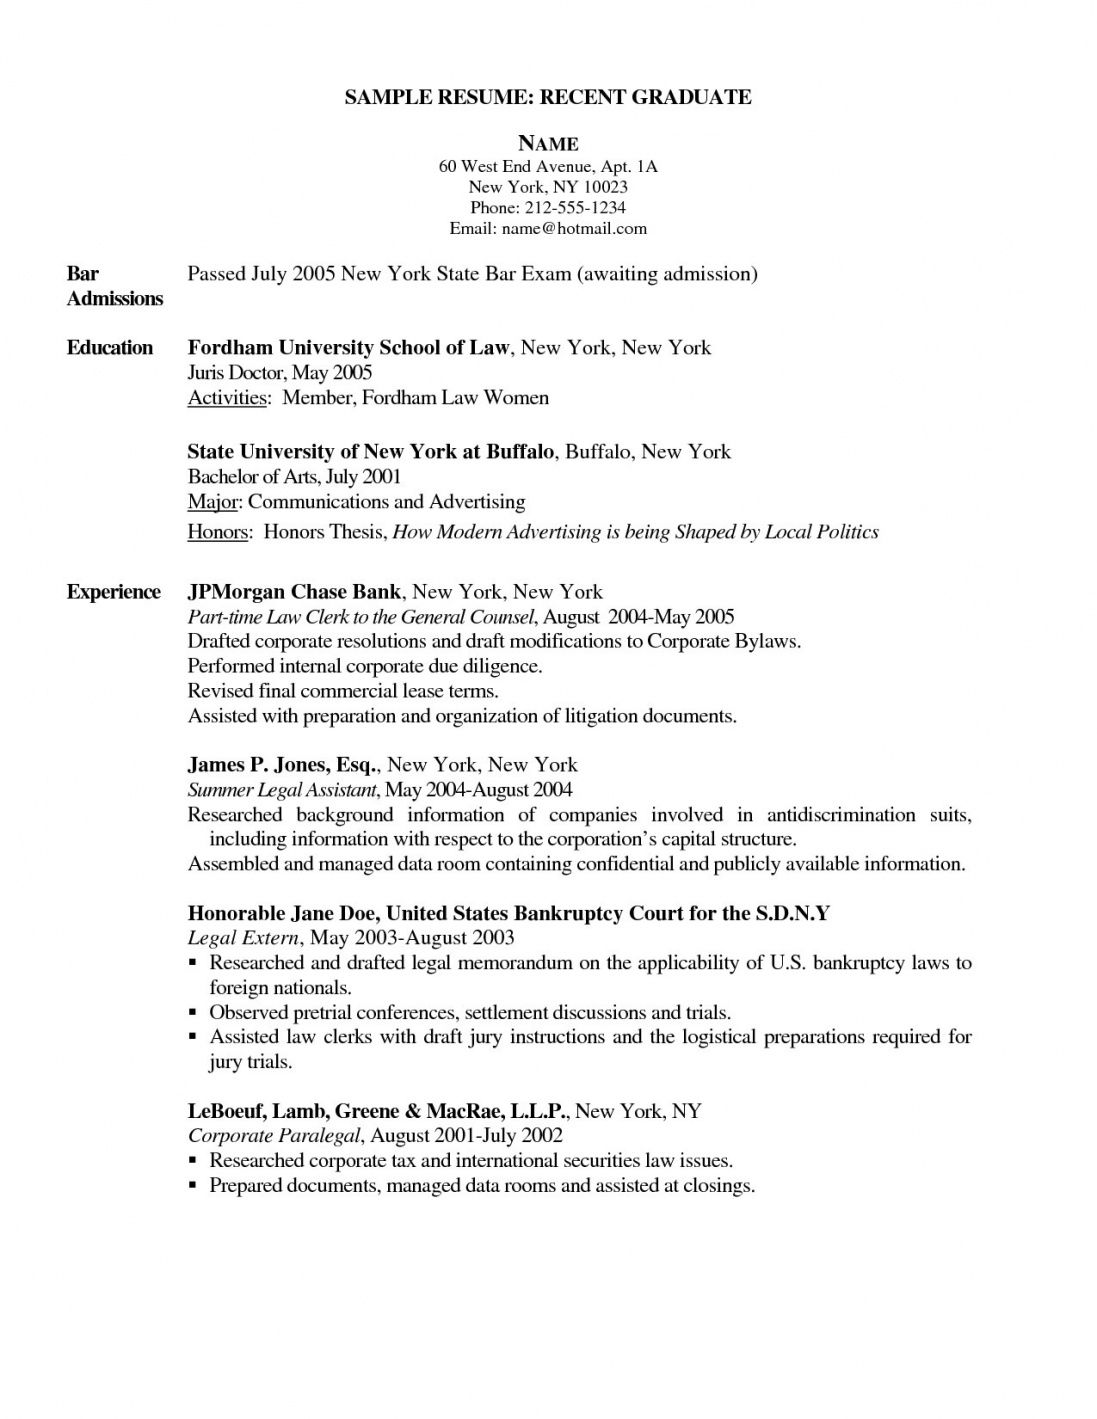 New Grad Nurse Resume Nursing Resume Objective Examples Awesome Graduate Nurse Resume new grad nurse resume|wikiresume.com